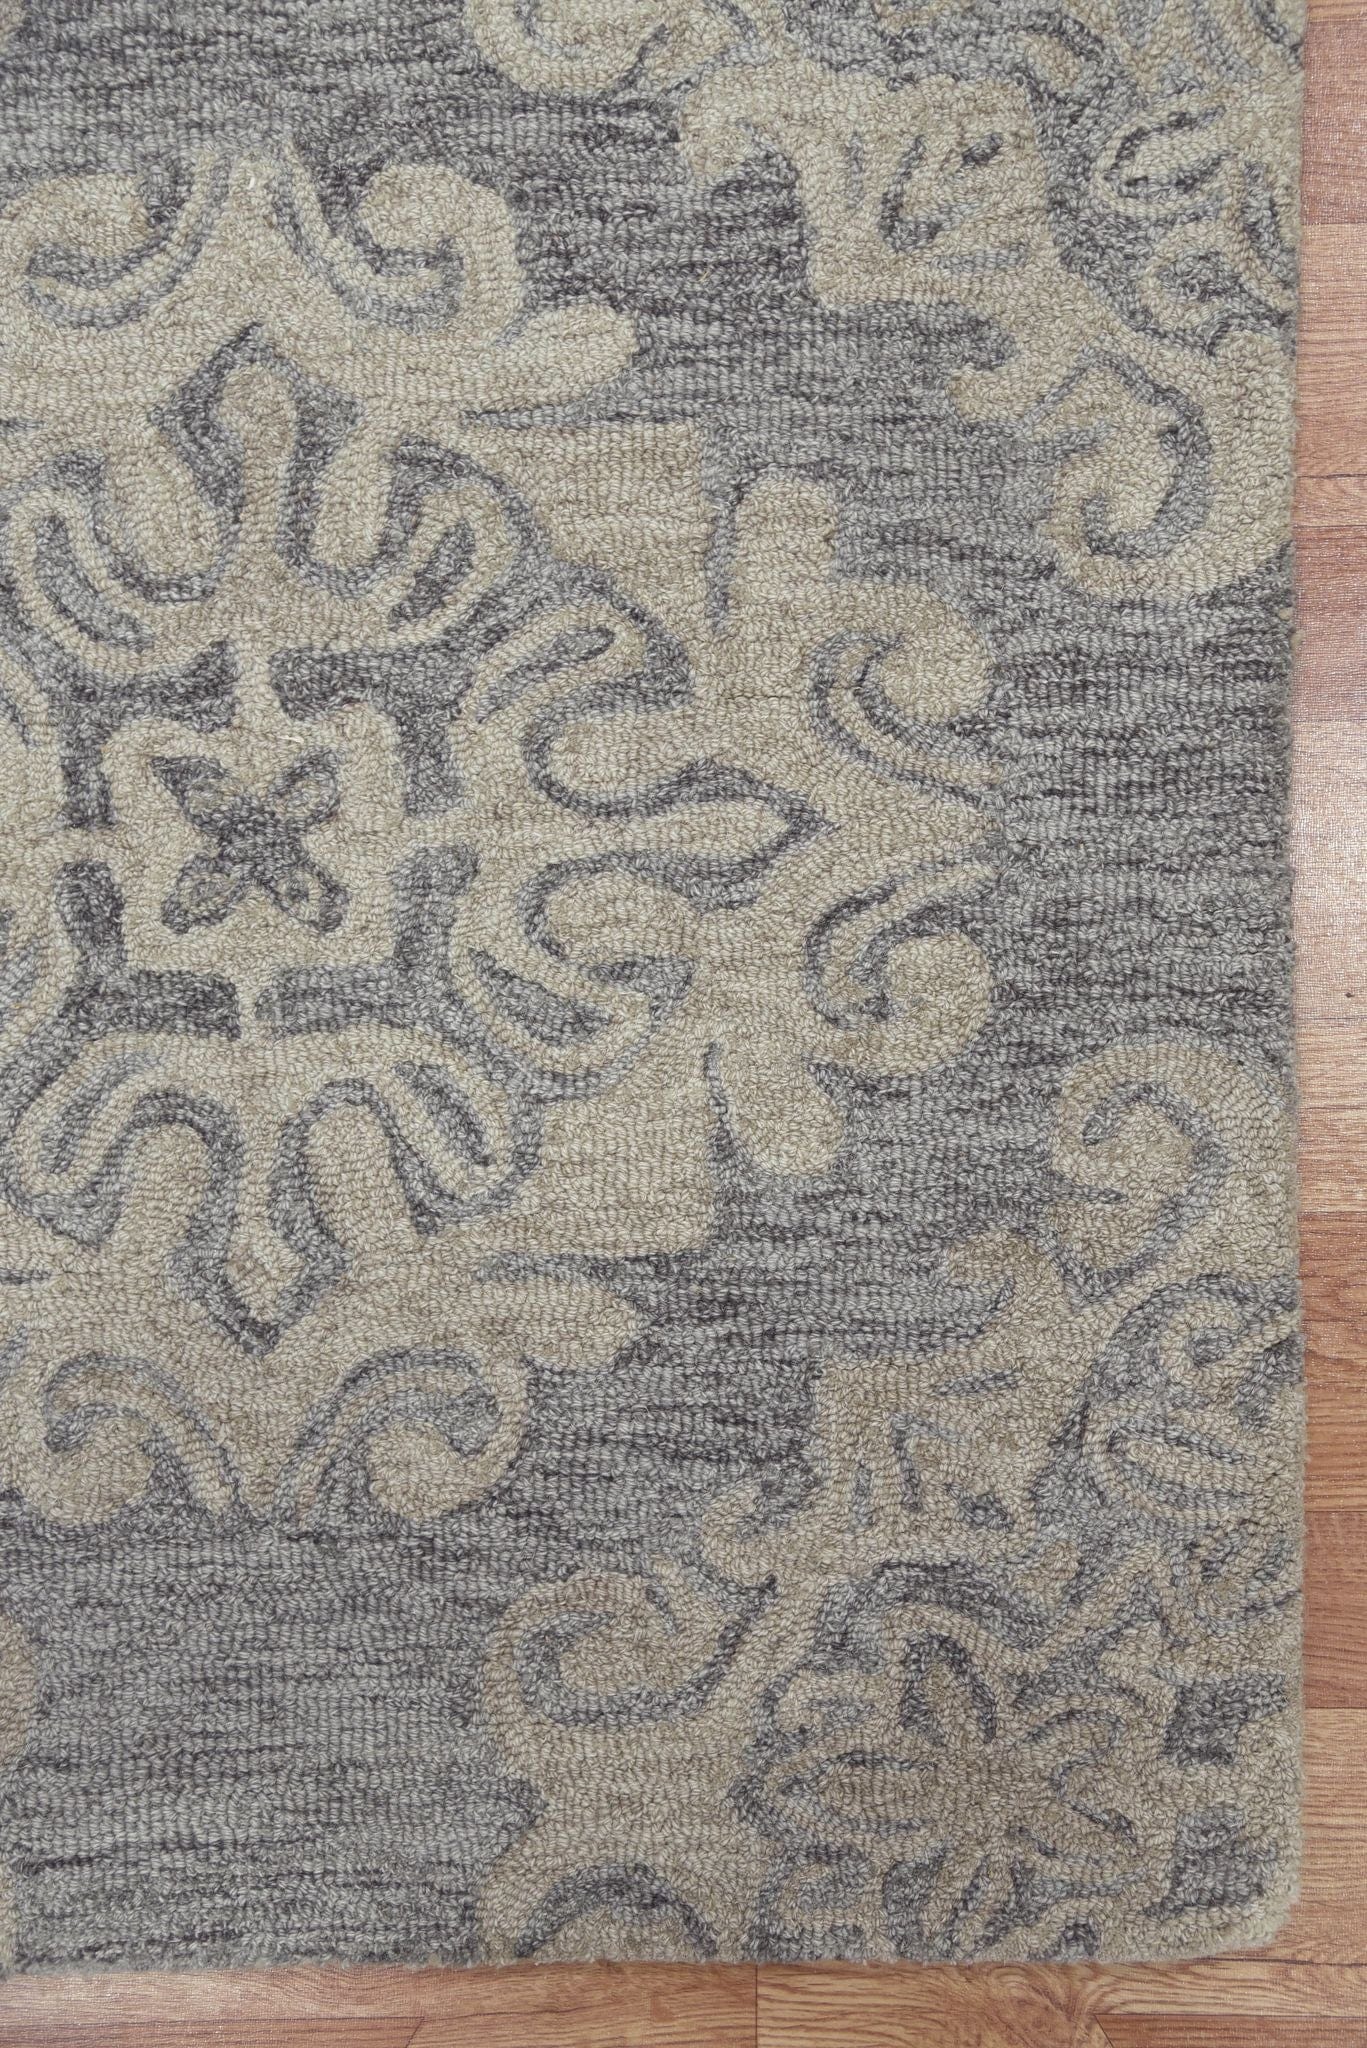 Jelly Bean Wool Boston 5x8 Feet  Hand-Tufted Carpet - Rug